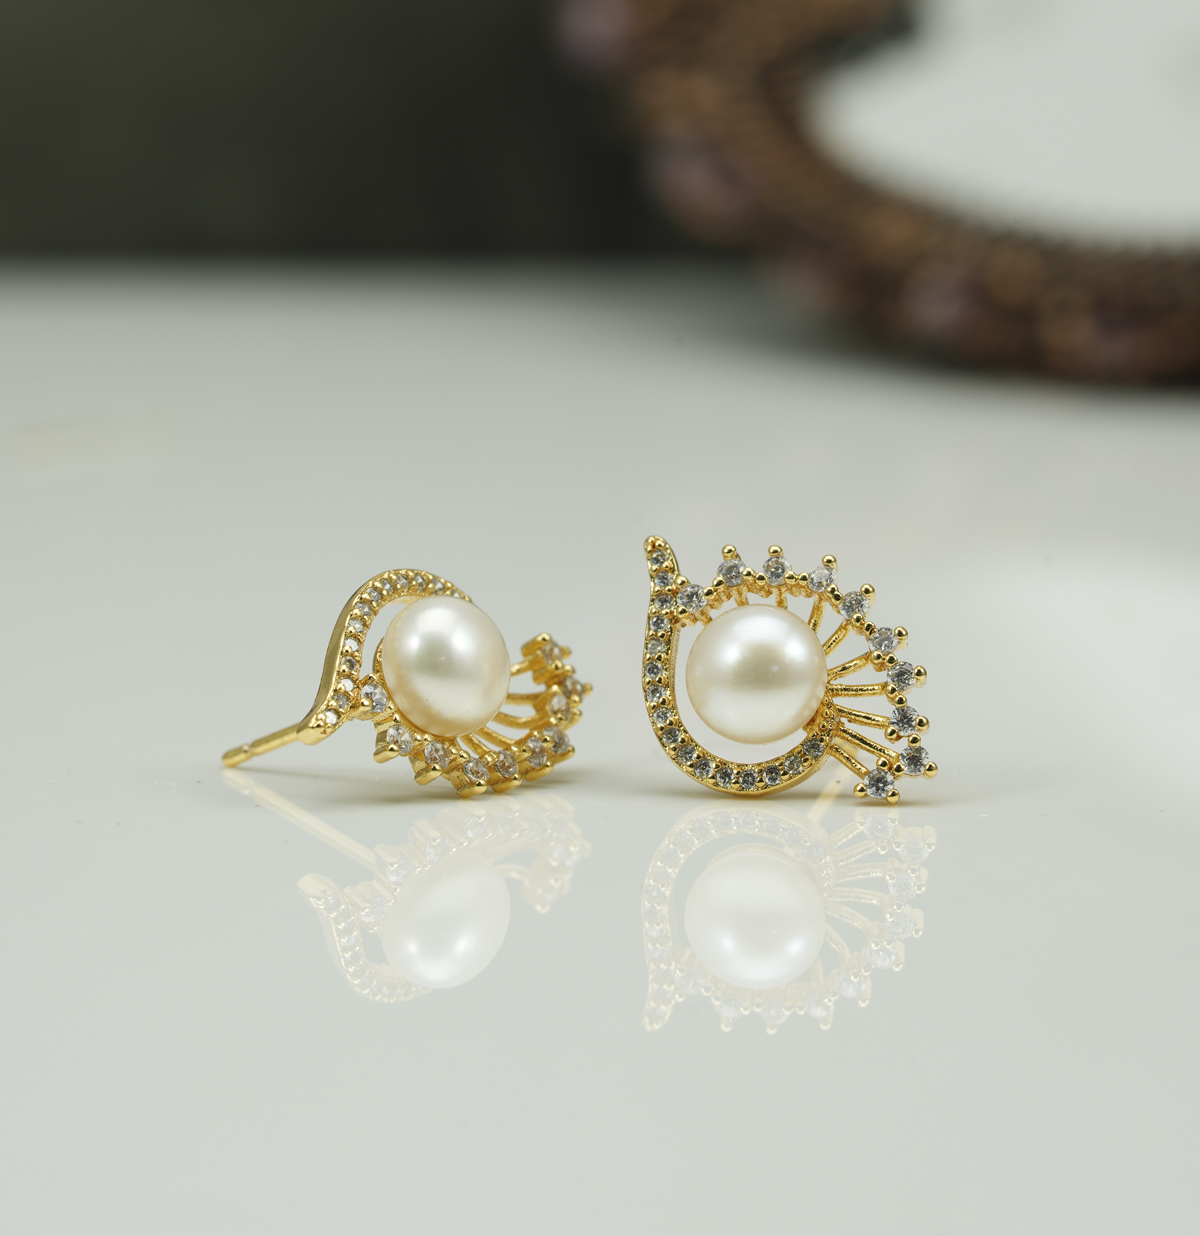 Pearl Stud Earrings in 18K Yellow Gold with Pearls and Diamonds, 14mm |  David Yurman